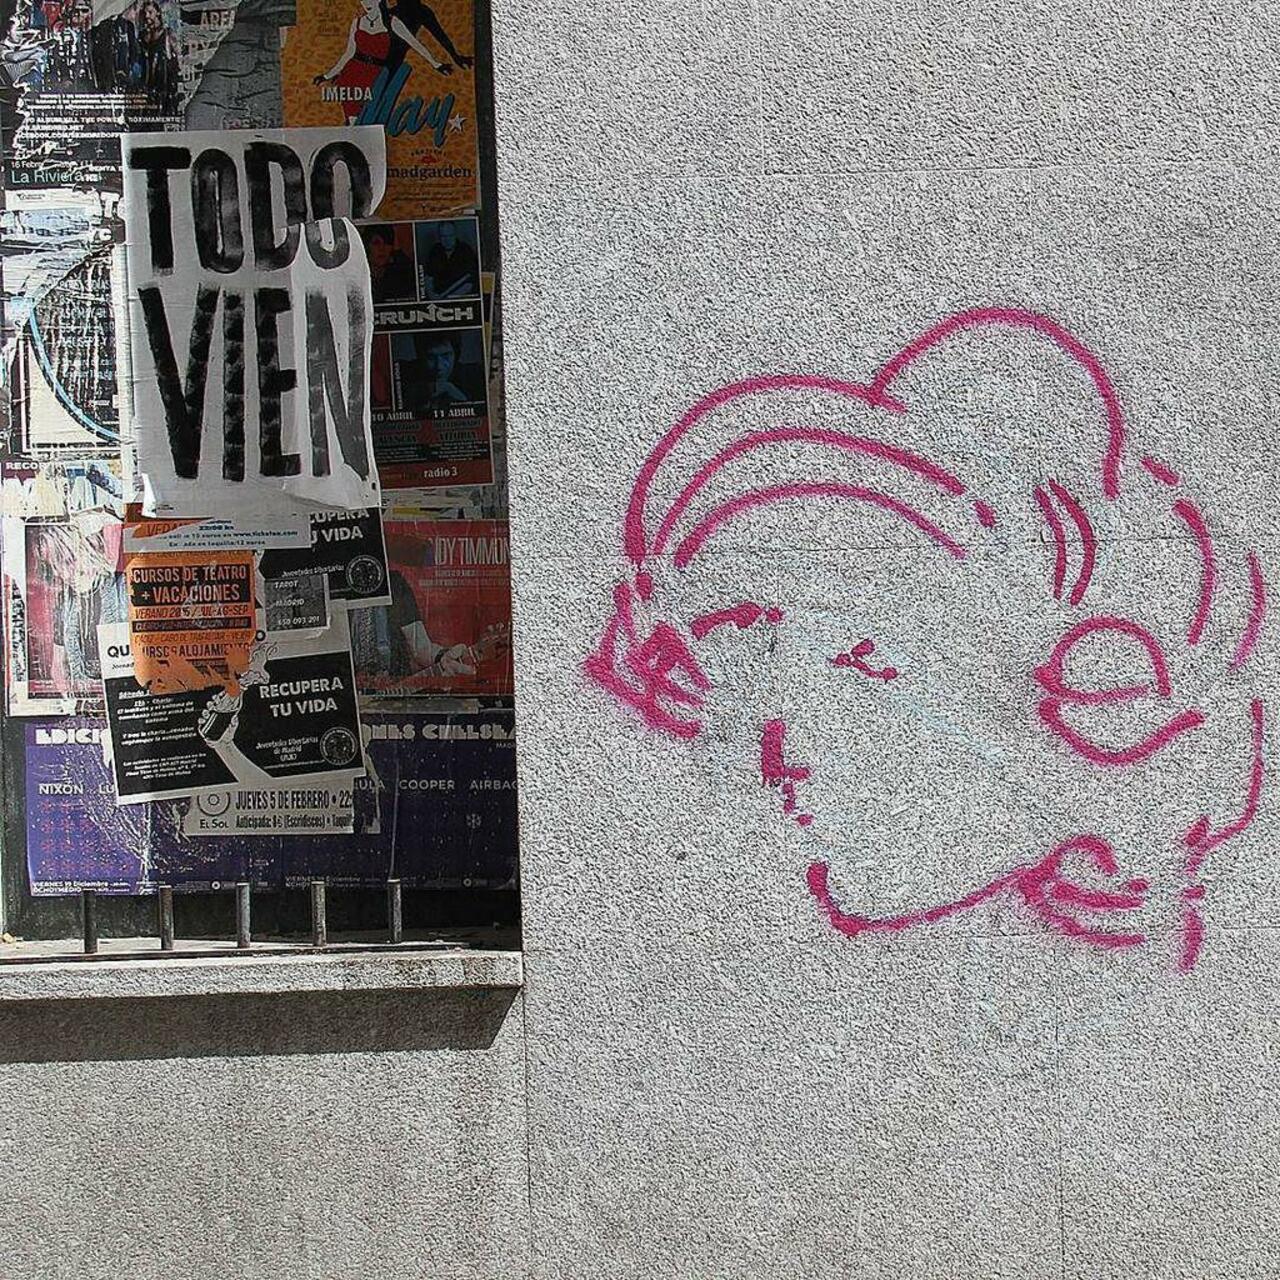 #madrid #madriz #madri #streetart #graffiti #grafite #arteurbano #lavapies #lavapiés #todovien #tebo #__tebo__ @___… http://t.co/dDKa6PWvXx